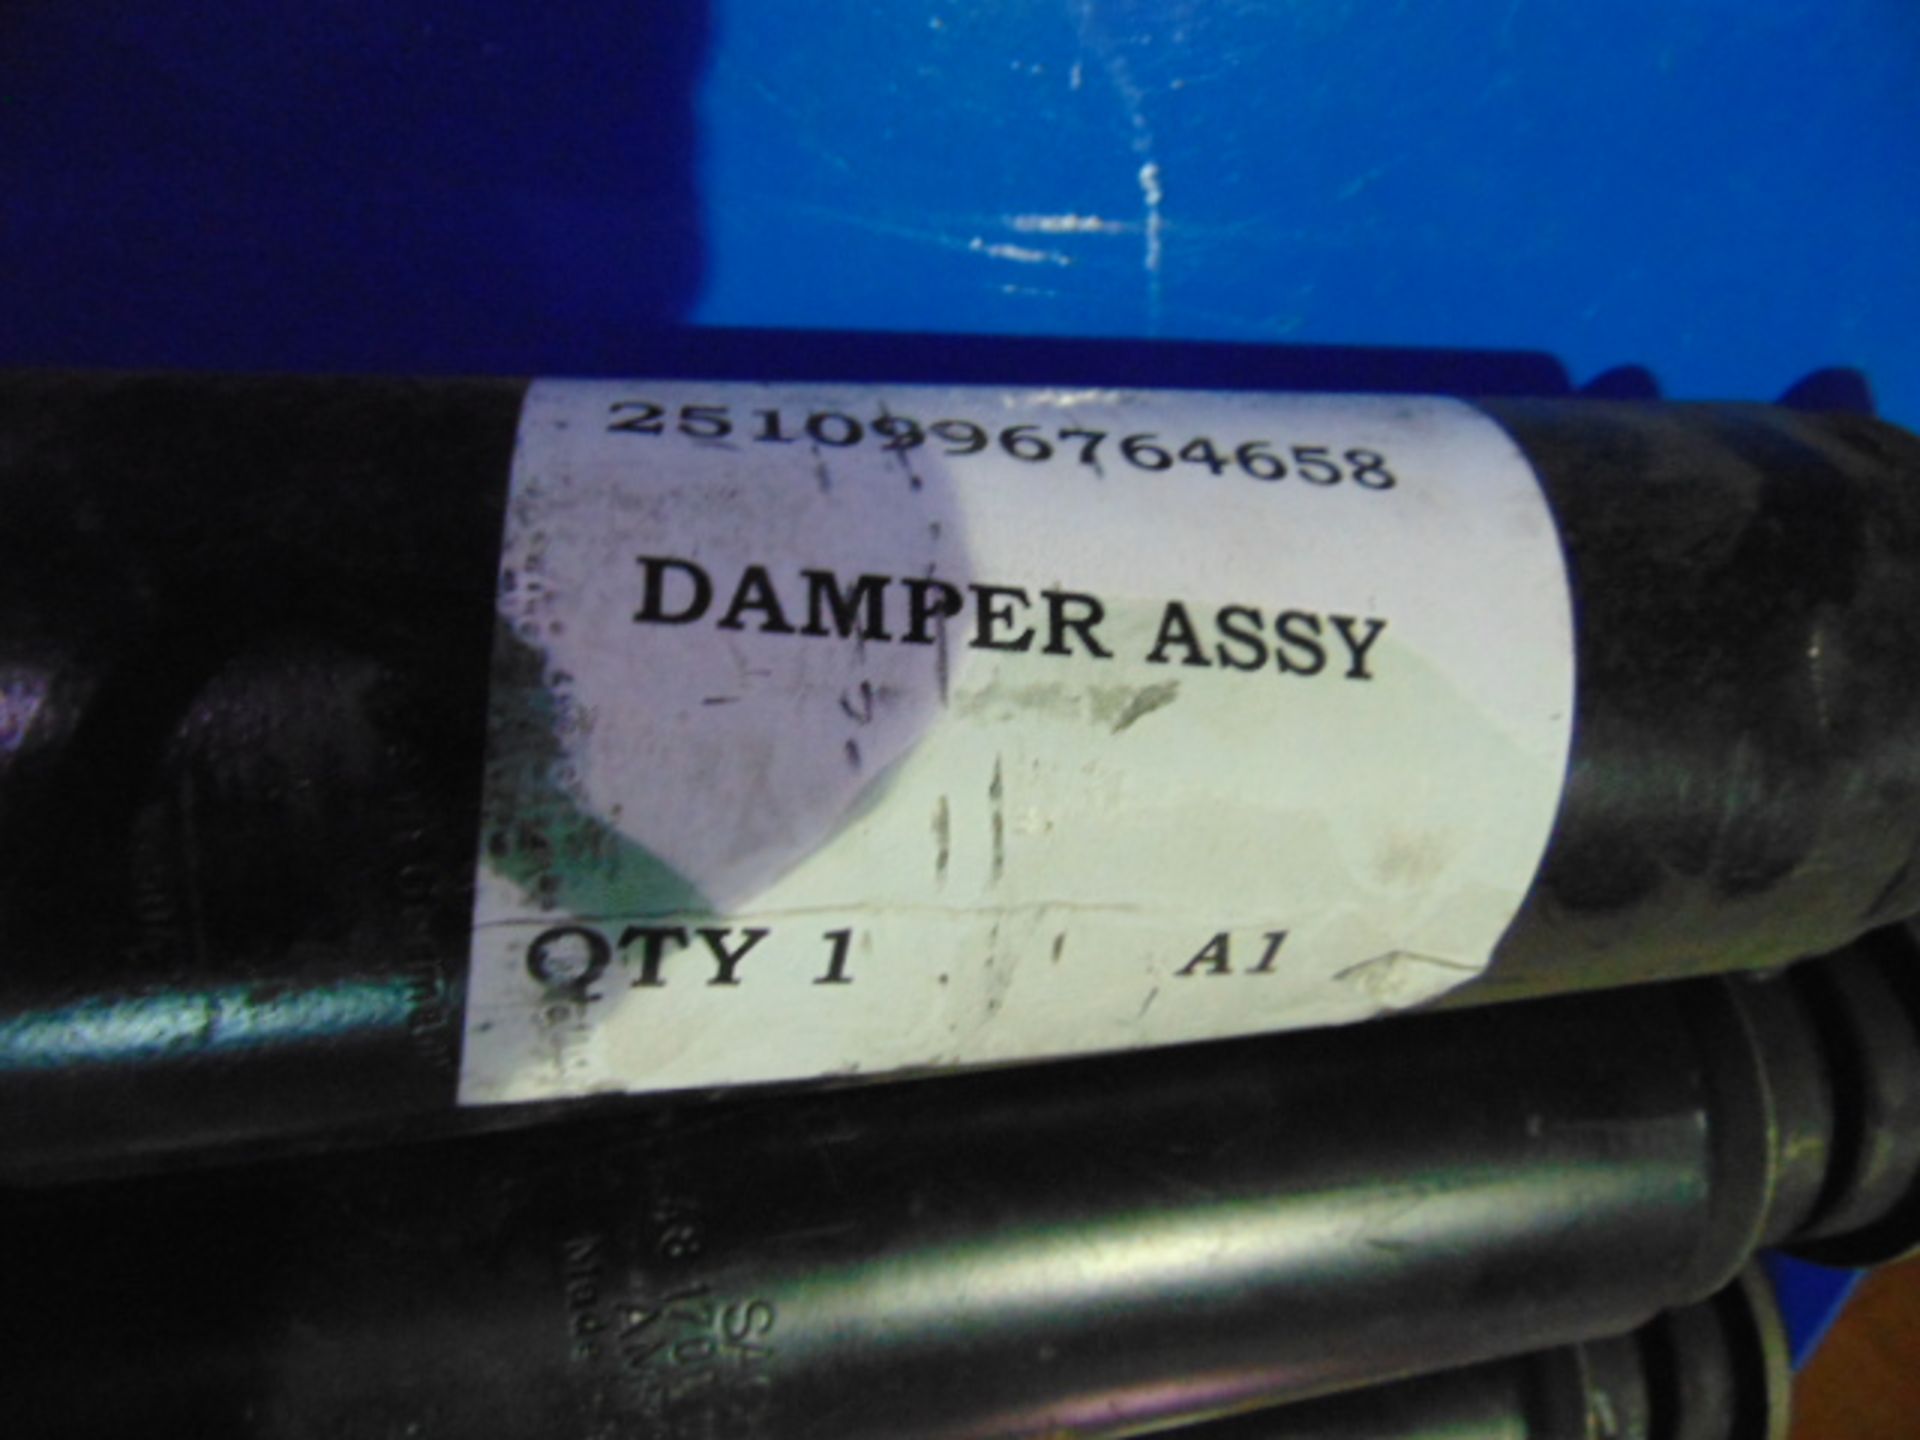 Qty 4 Damper Assy P/N 2610 99 676 4658 - Image 2 of 4